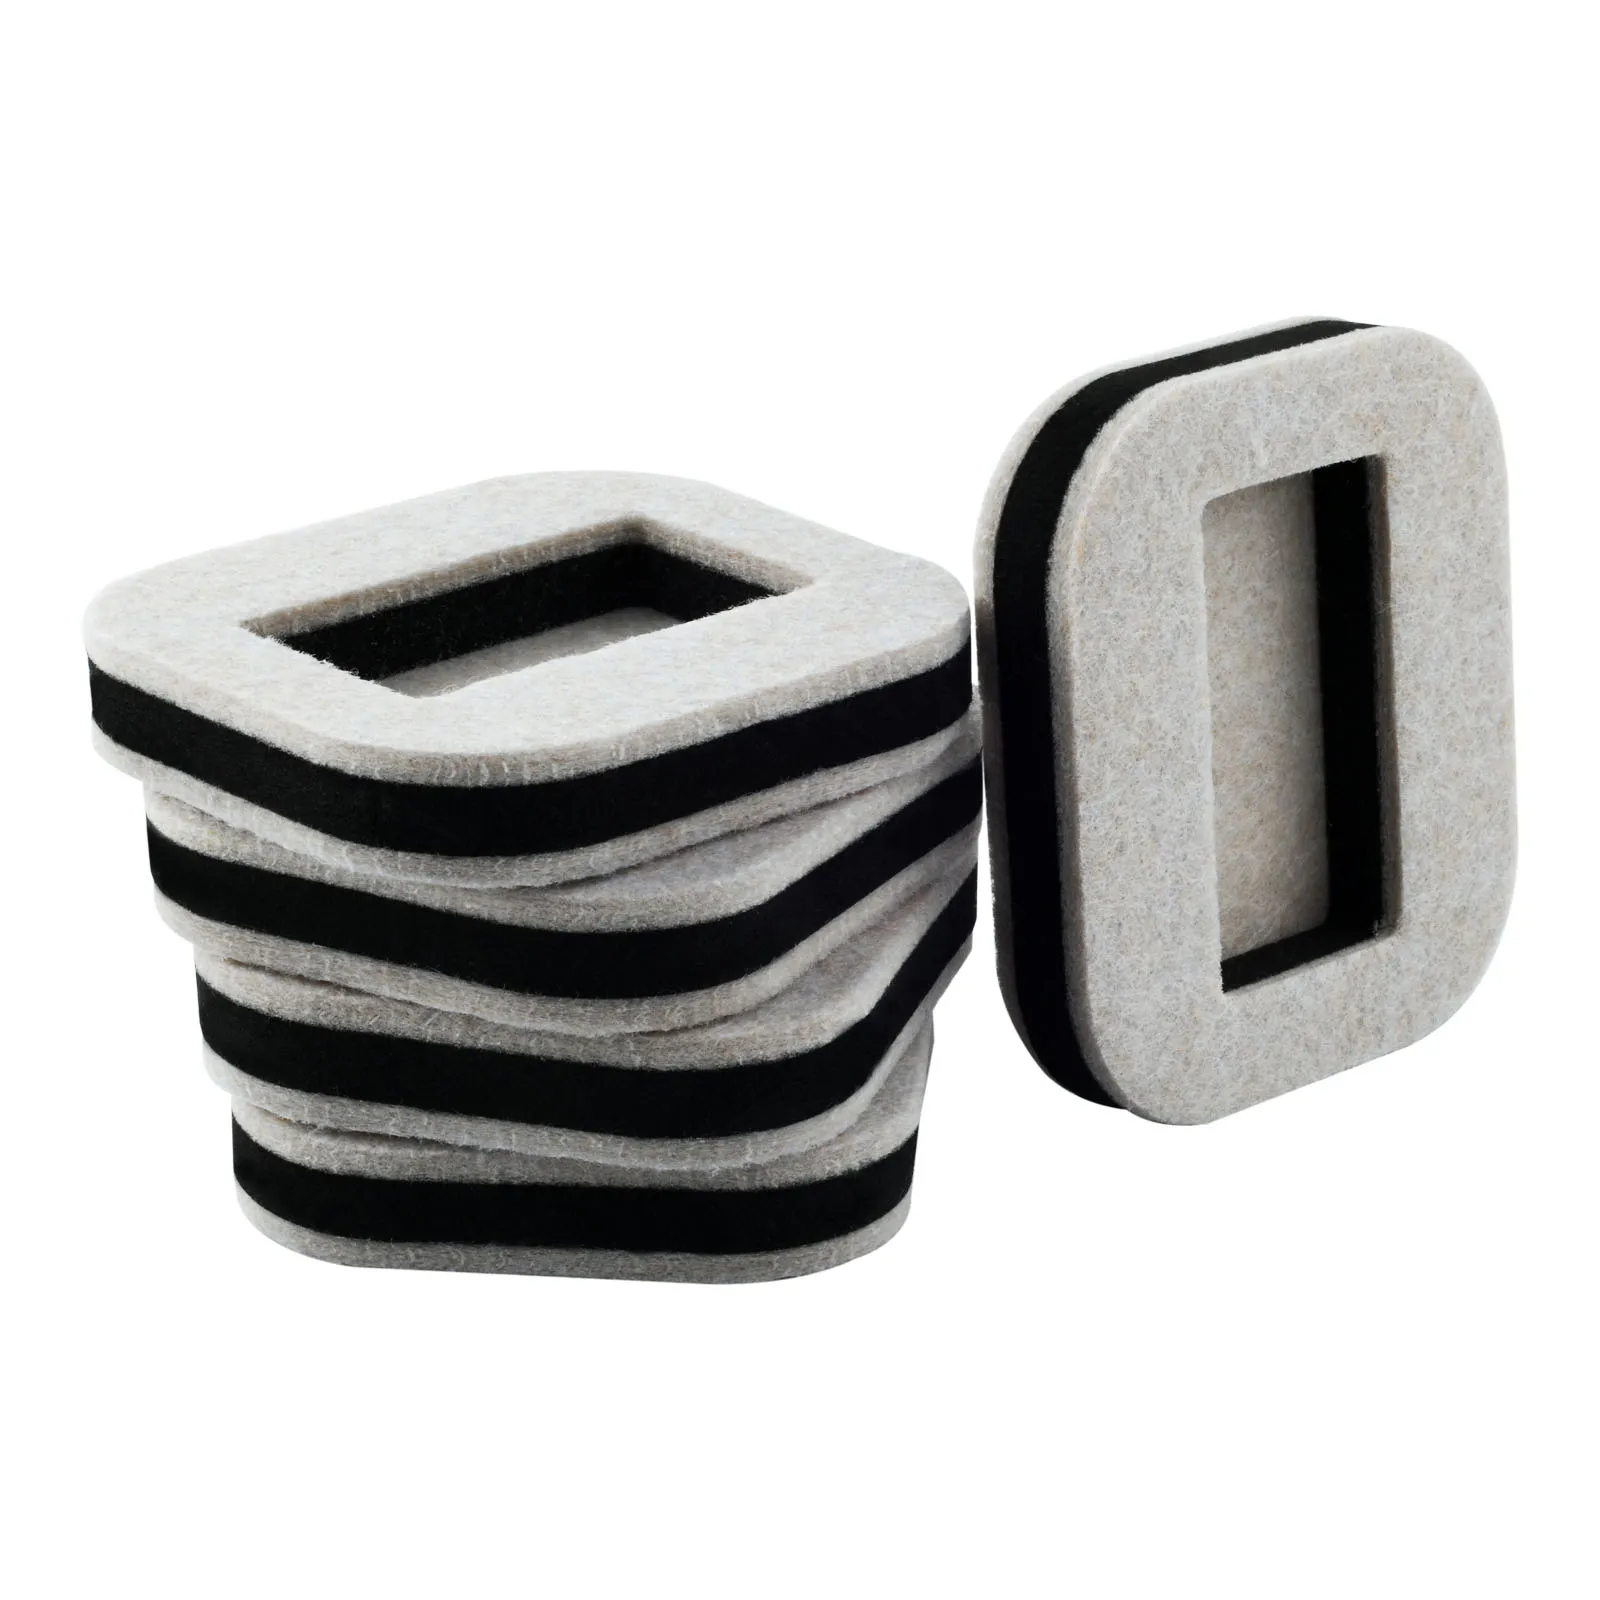 5 Pcs Bottom Furniture Caster Cups Felt Pads Hardwood Floor Protectors Bed Wheels Stopper Anti Vibration/Noisy Pad Anti-slip Mat